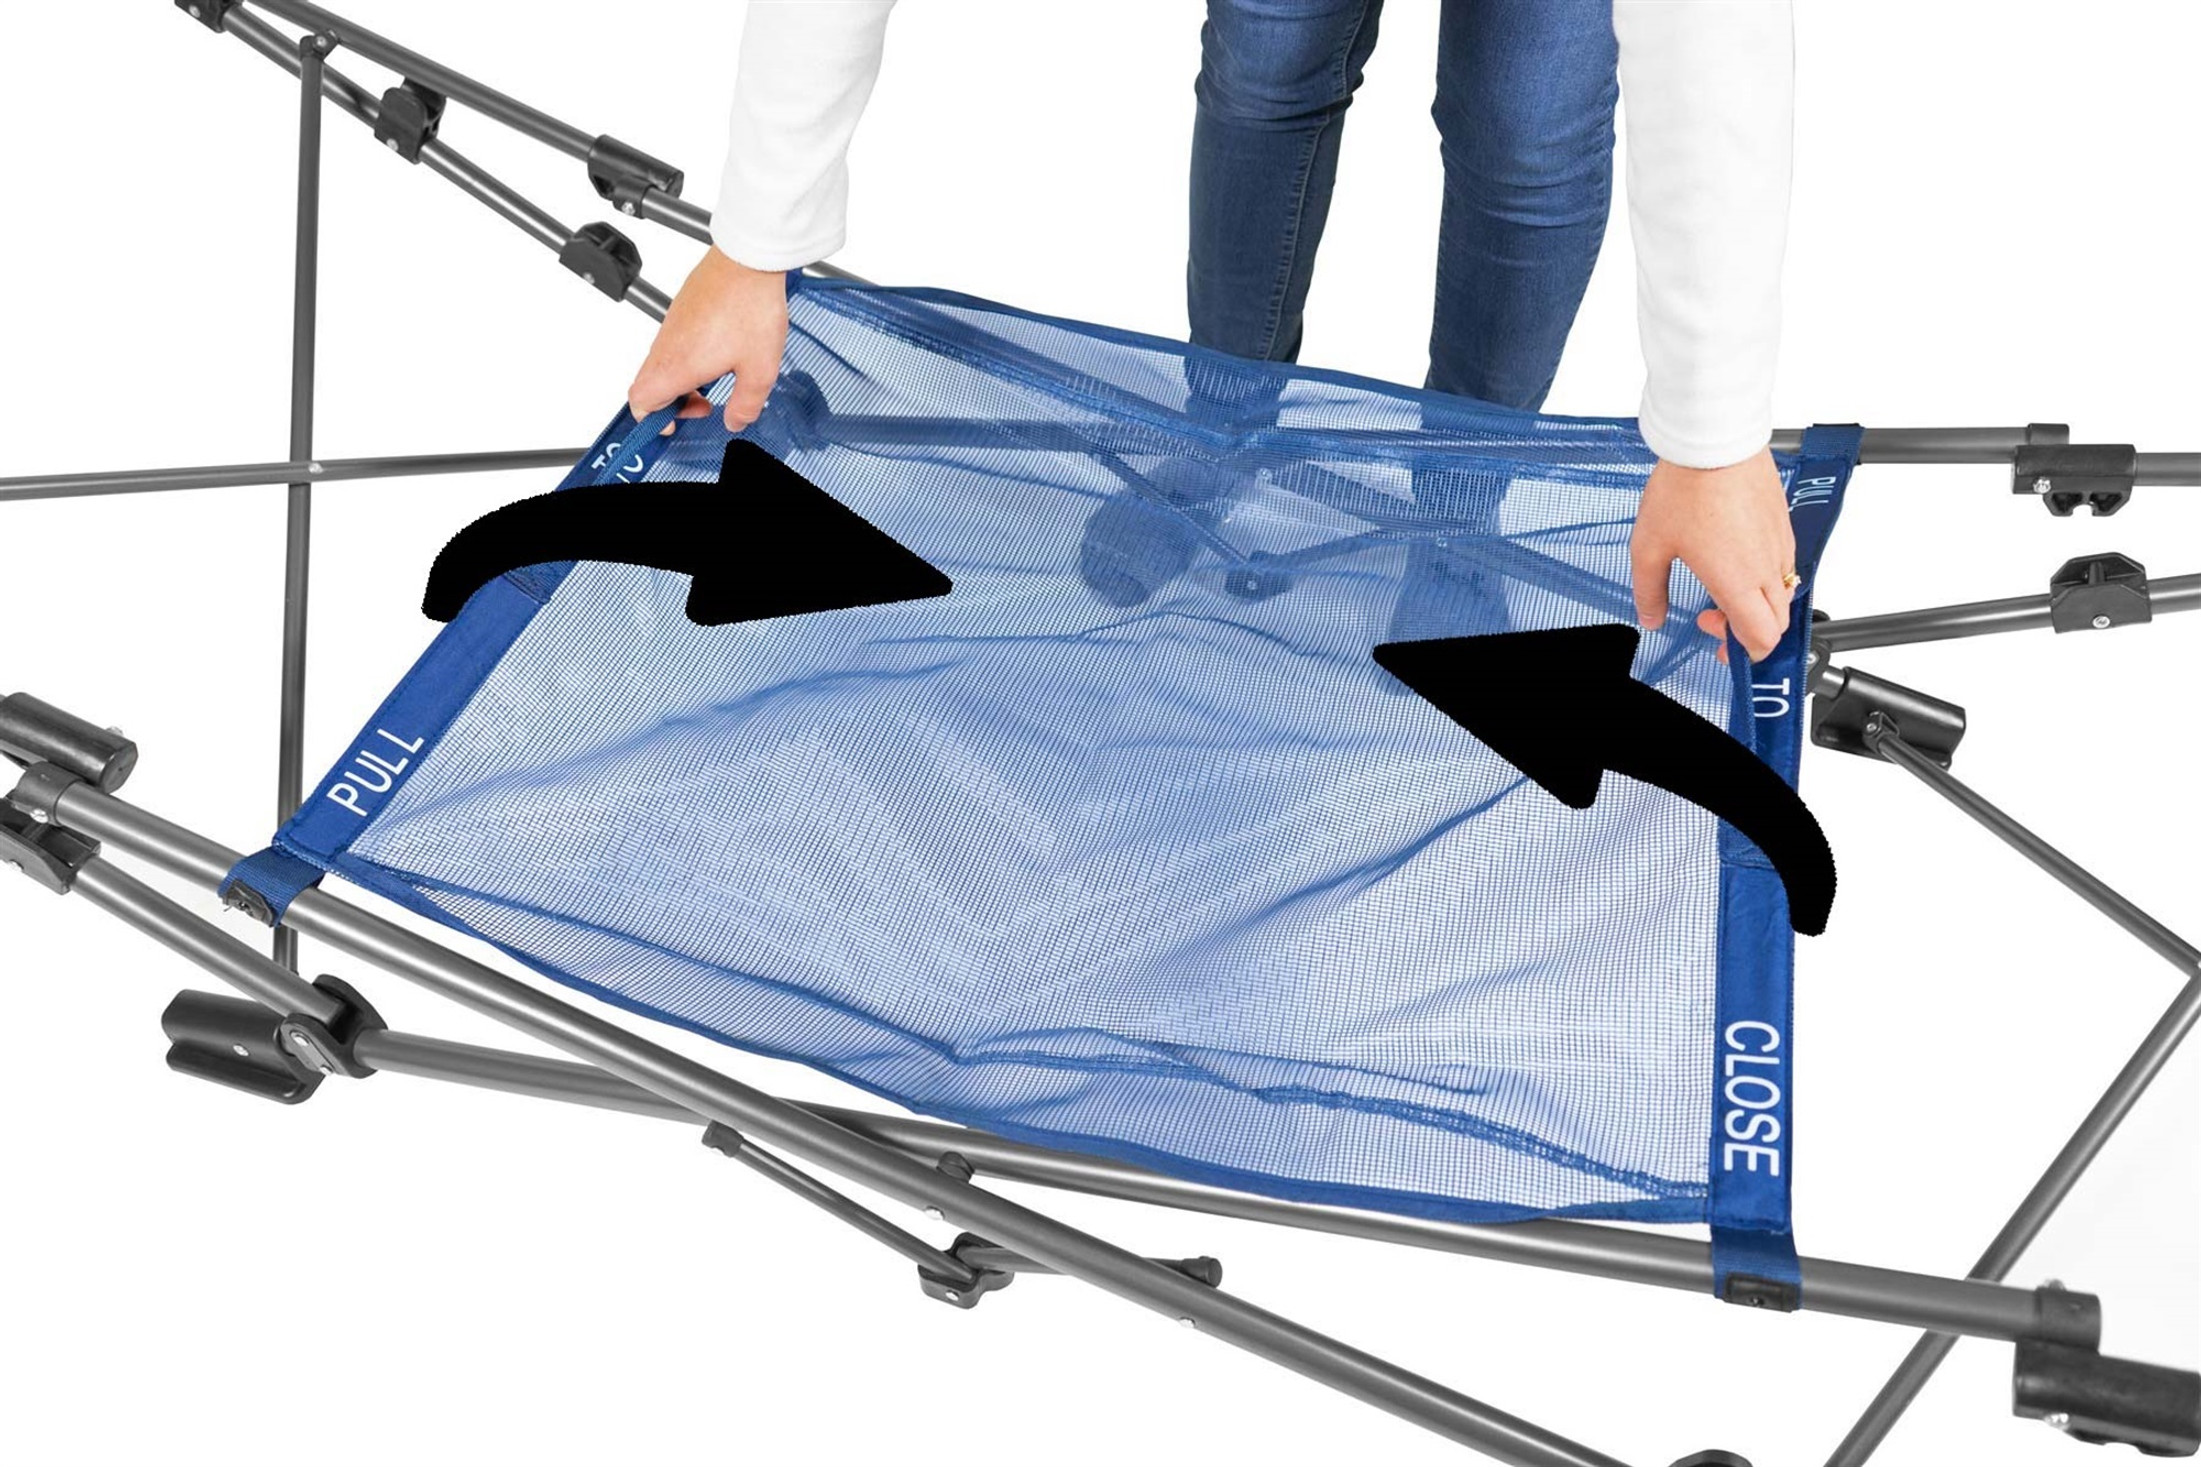 Zenithen Full-Sized Portable Folding Out/Indoor Hammock, Blue